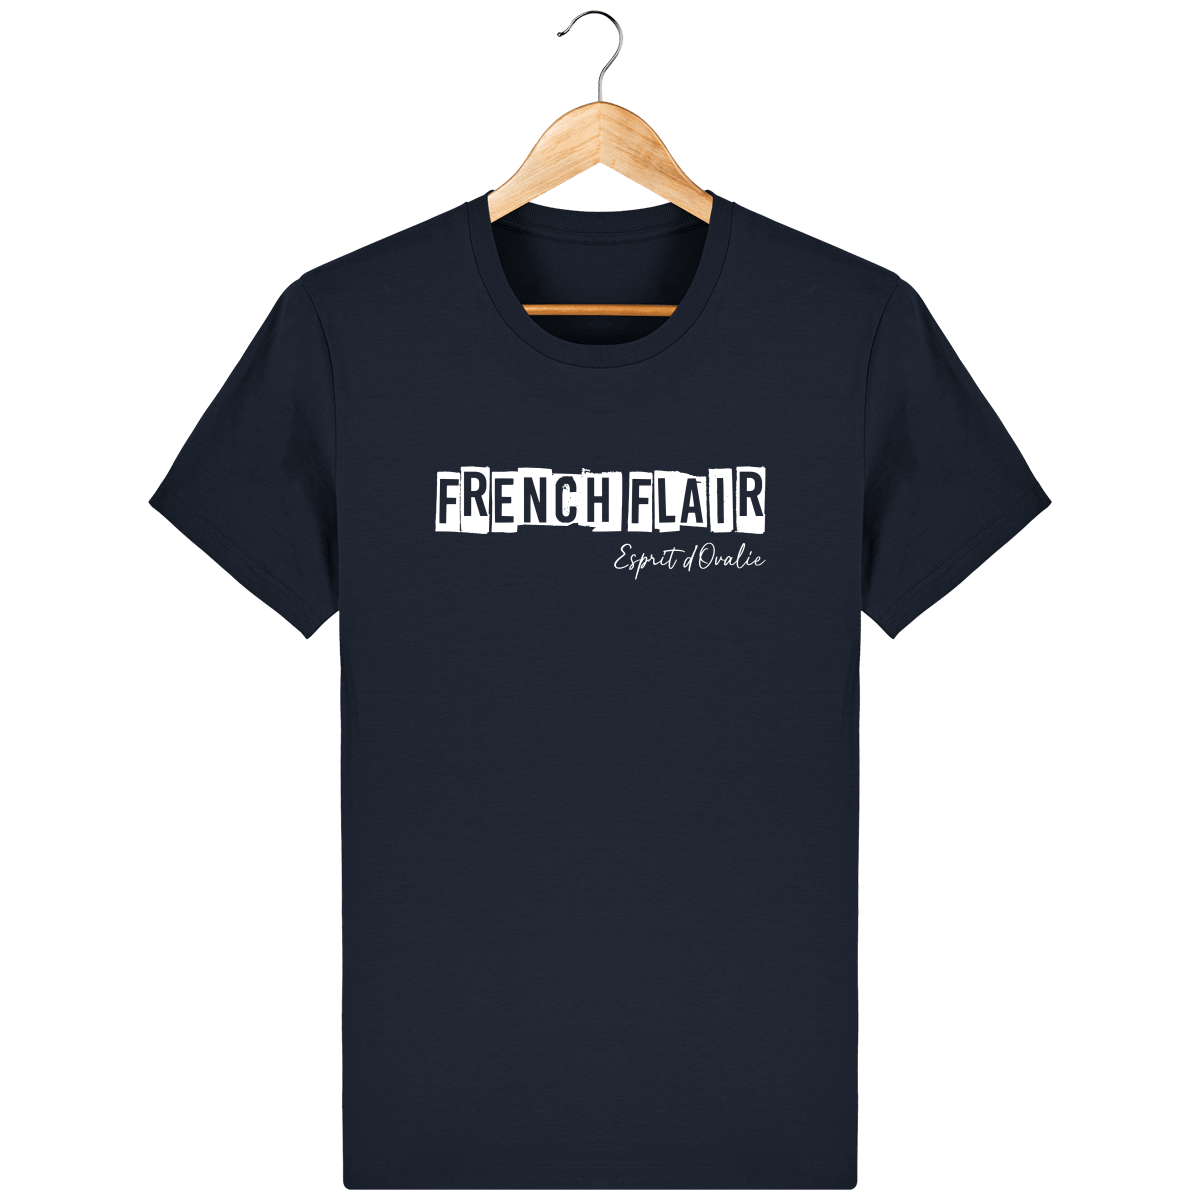 T-shirt bio Esprit d'Ovalie - Frenchflair 5XL